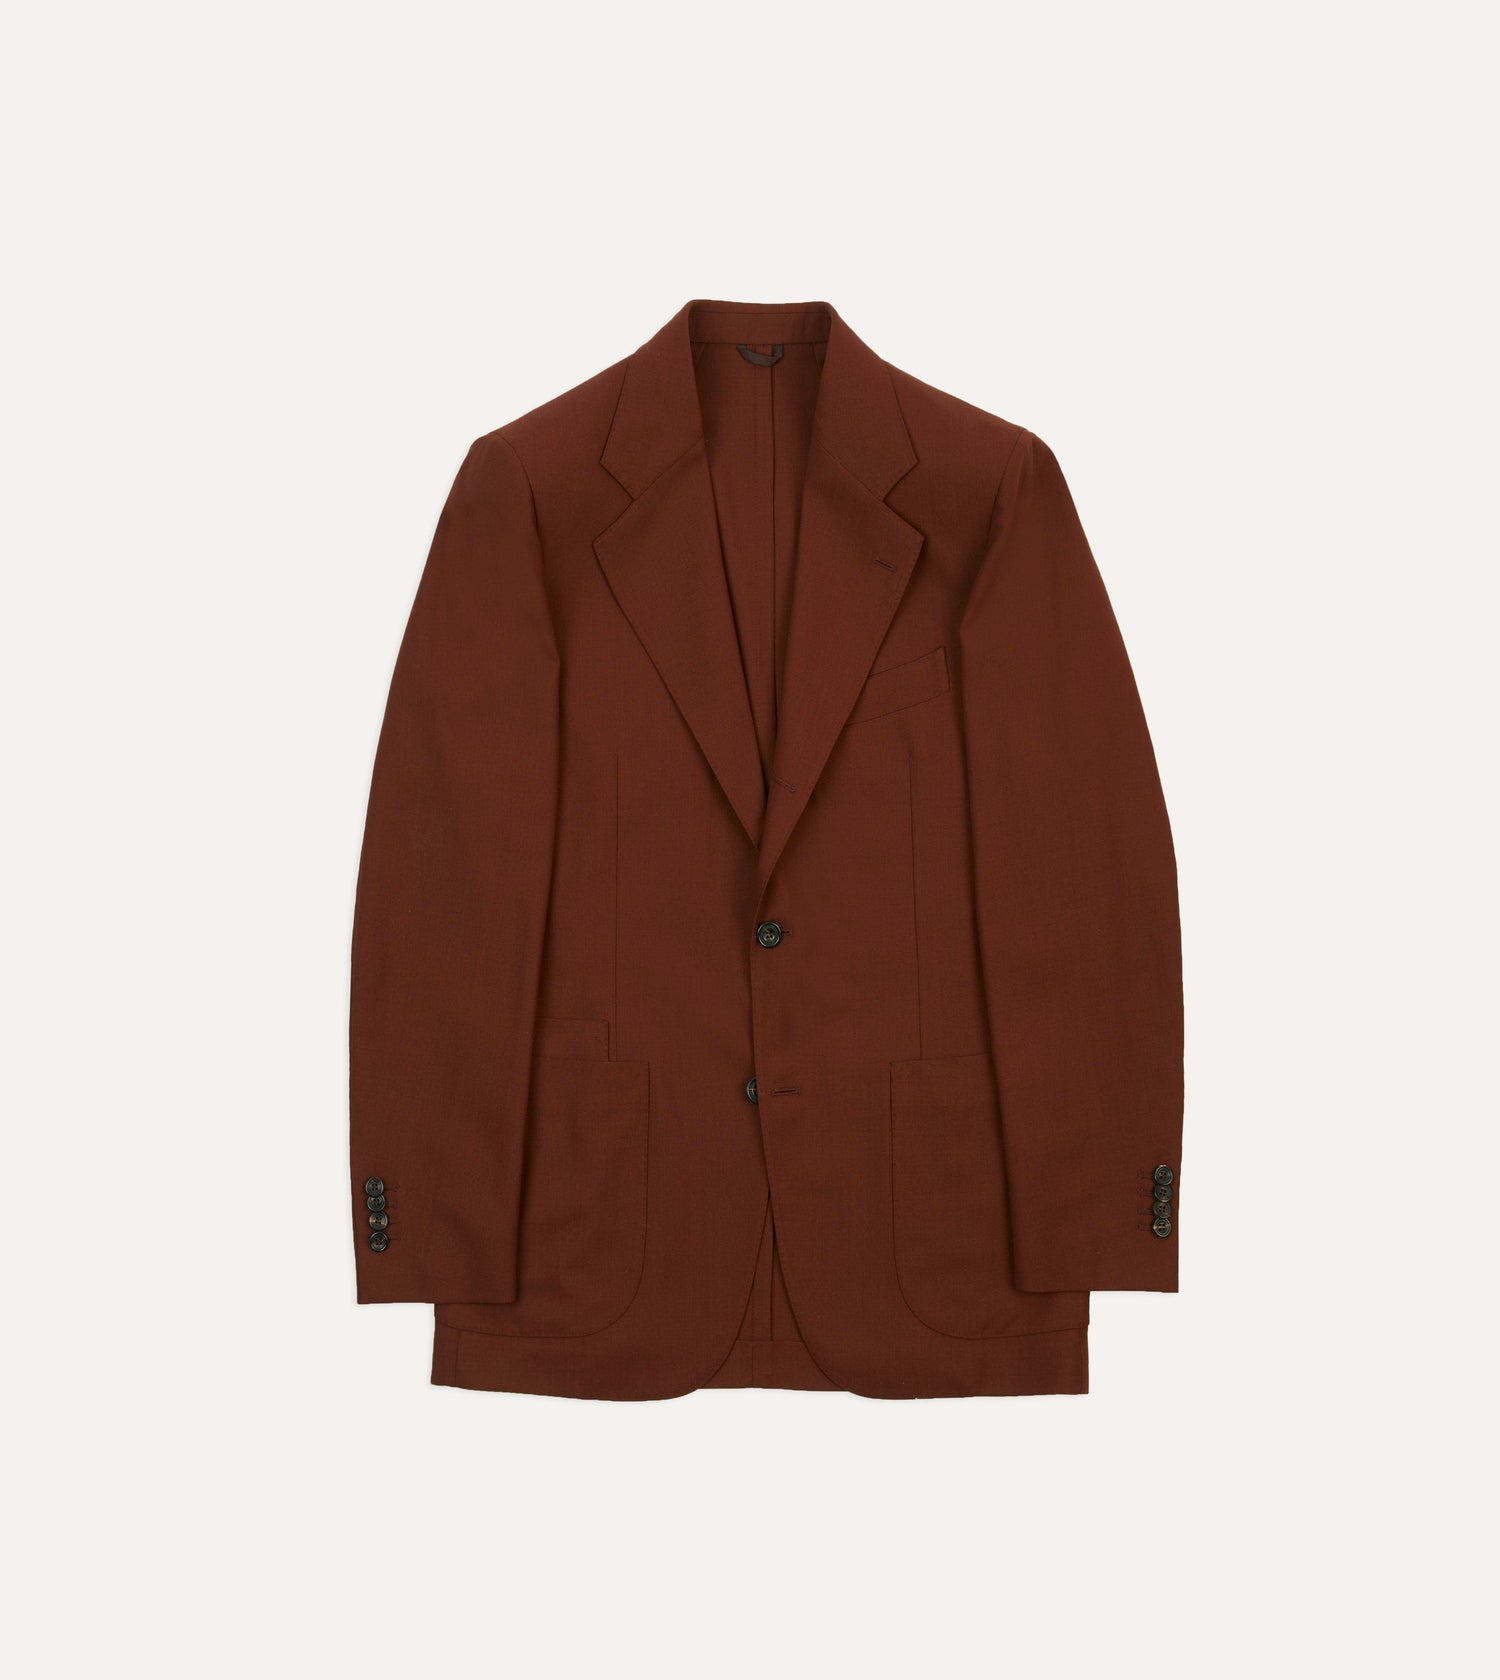 ALD / Drake's Single Breasted Wool Fresco Suit Jacket